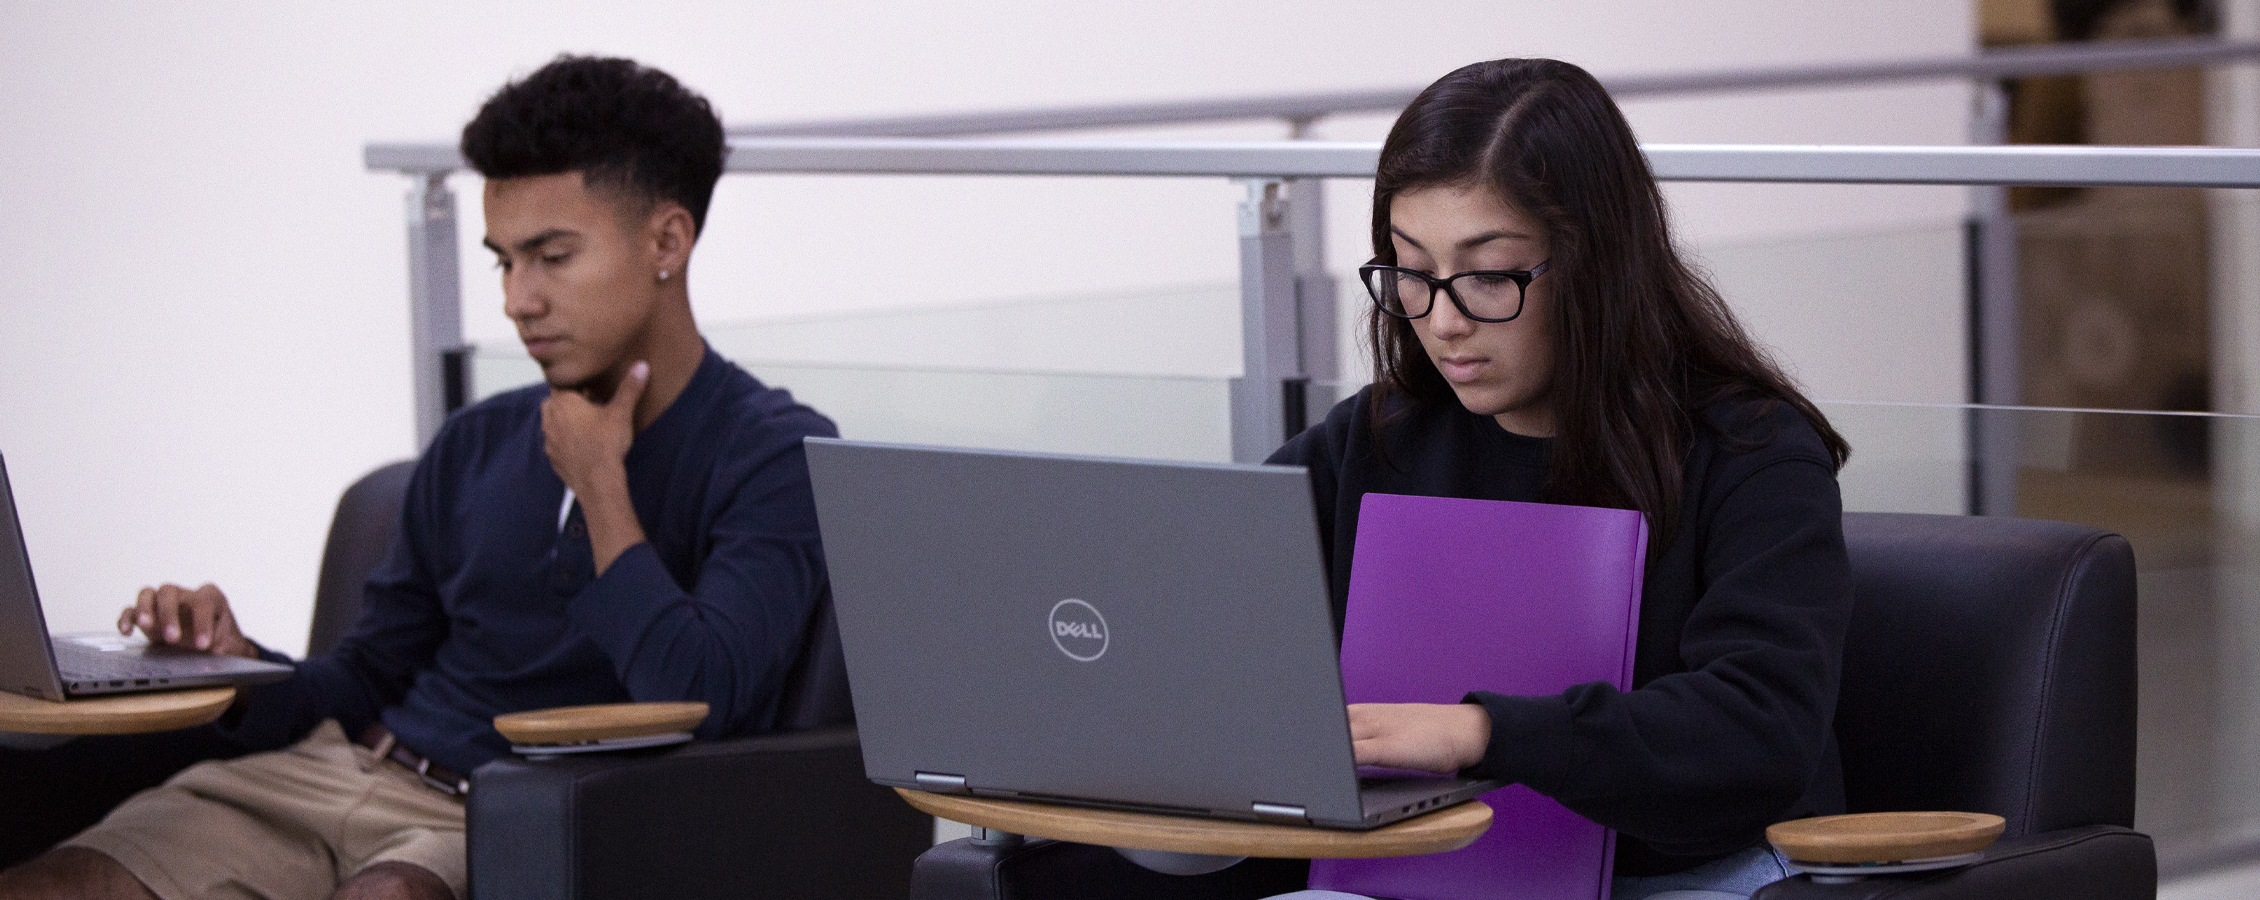 Dos estudiantes que trabajan con computadoras portátiles en un área de reunión.